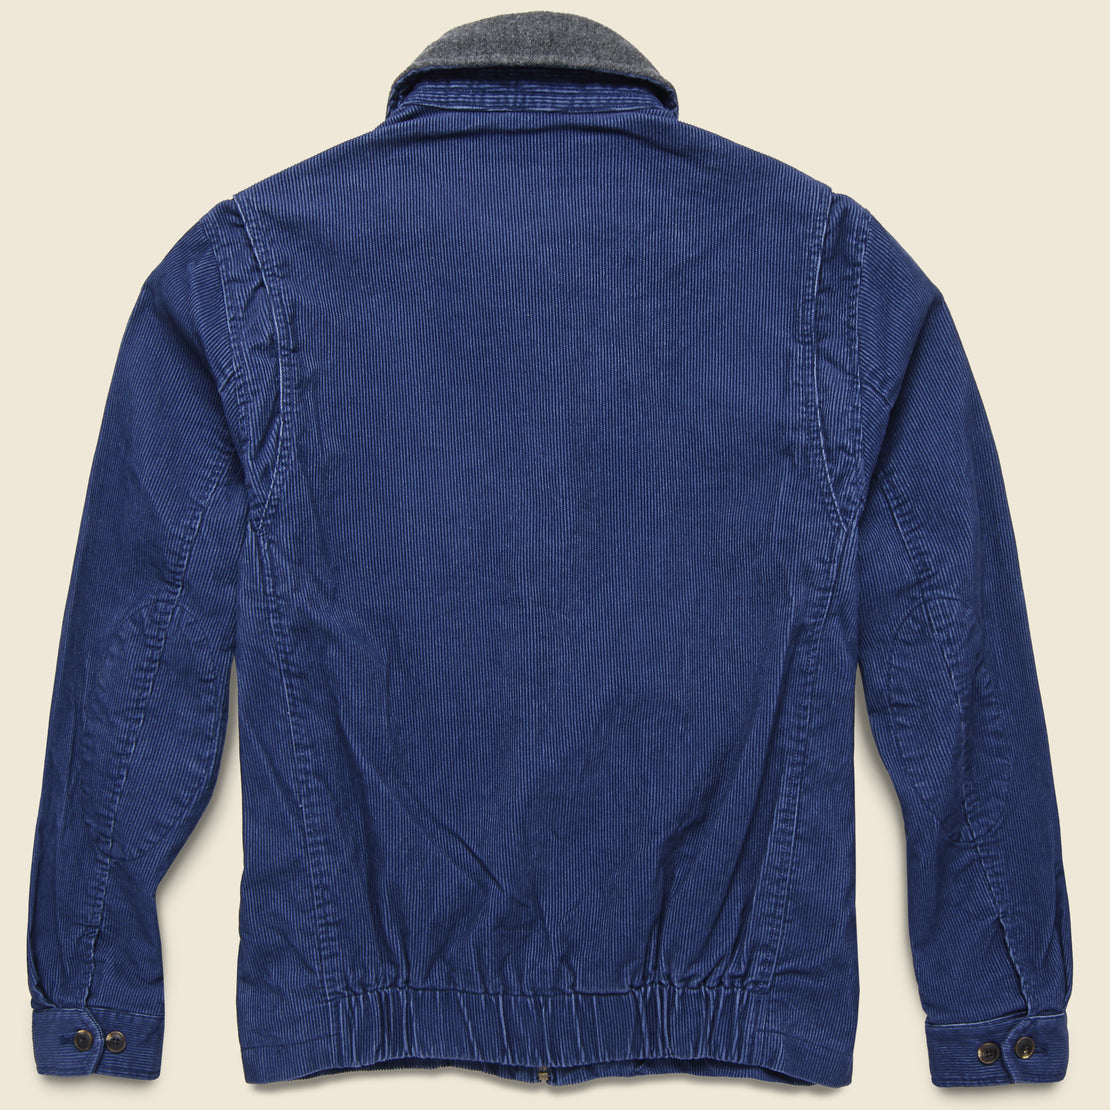 Conrad Corduroy Bomber - Indigo - Grayers - STAG Provisions - Outerwear - Coat / Jacket